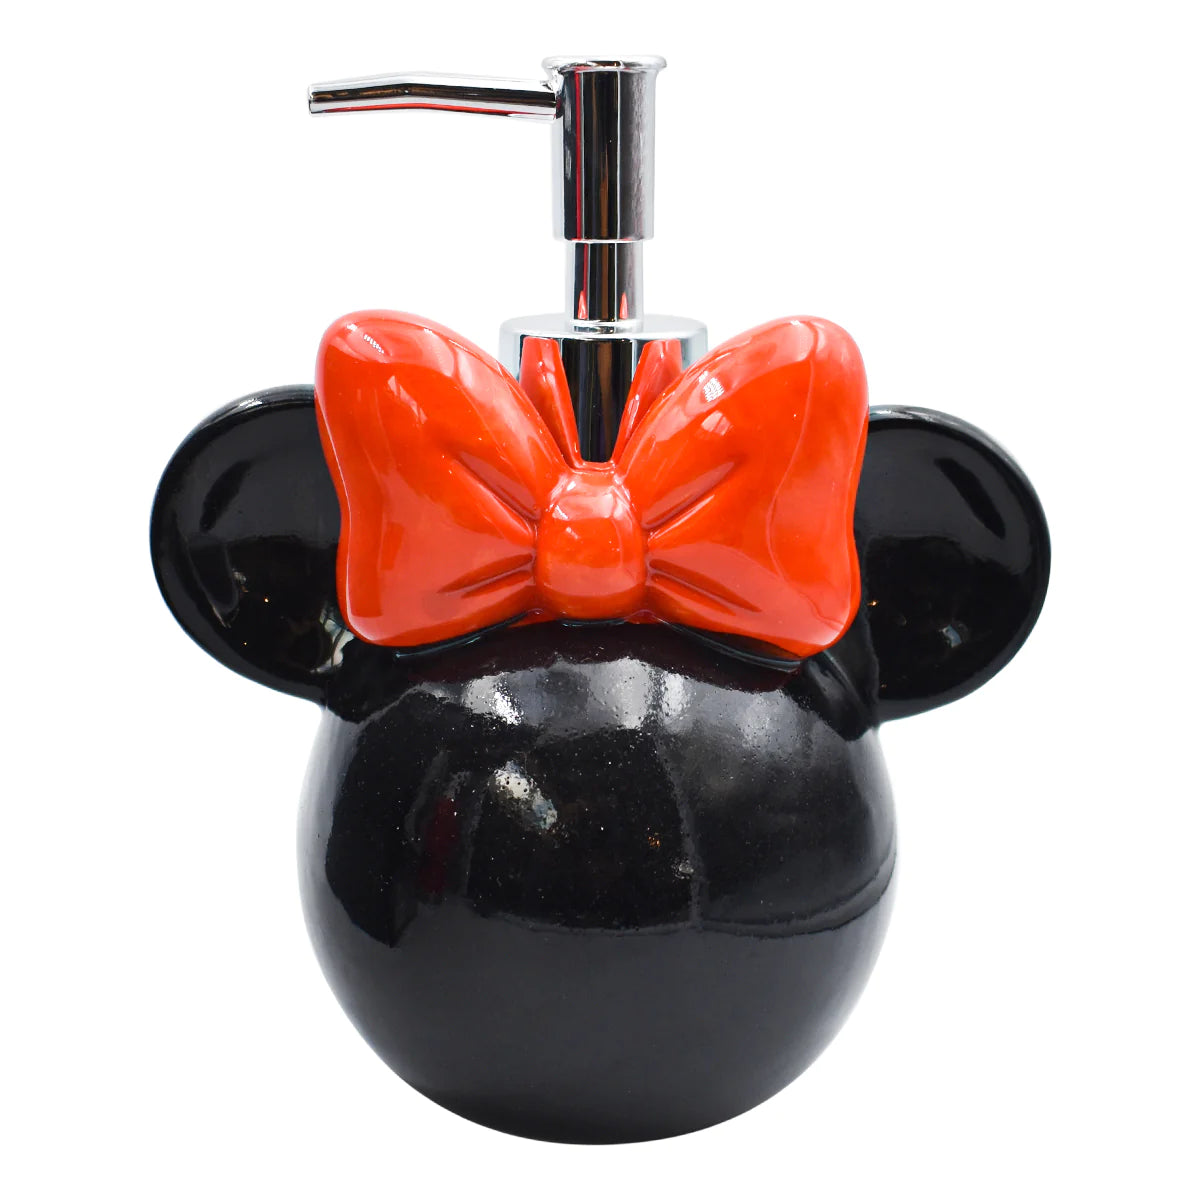 Dispensador Despachador para Jabon Crema Gel Antibacterial Fun kids Disney Mickey o Minnie Mouse Ceramica 335ml